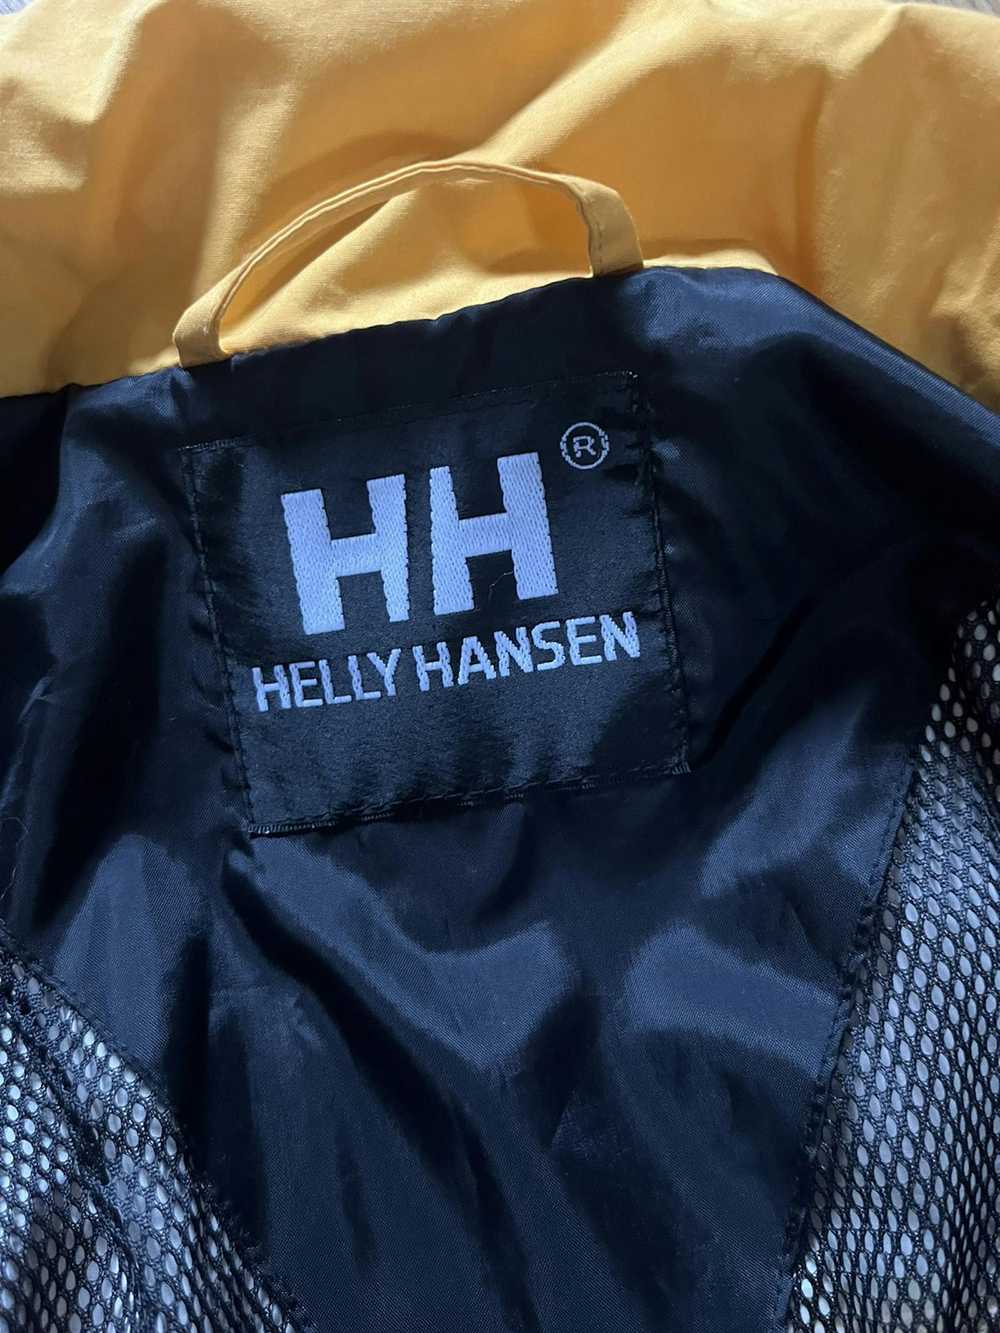 Helly Hansen HELLY HANSEN VINTAGE JACKET - image 9